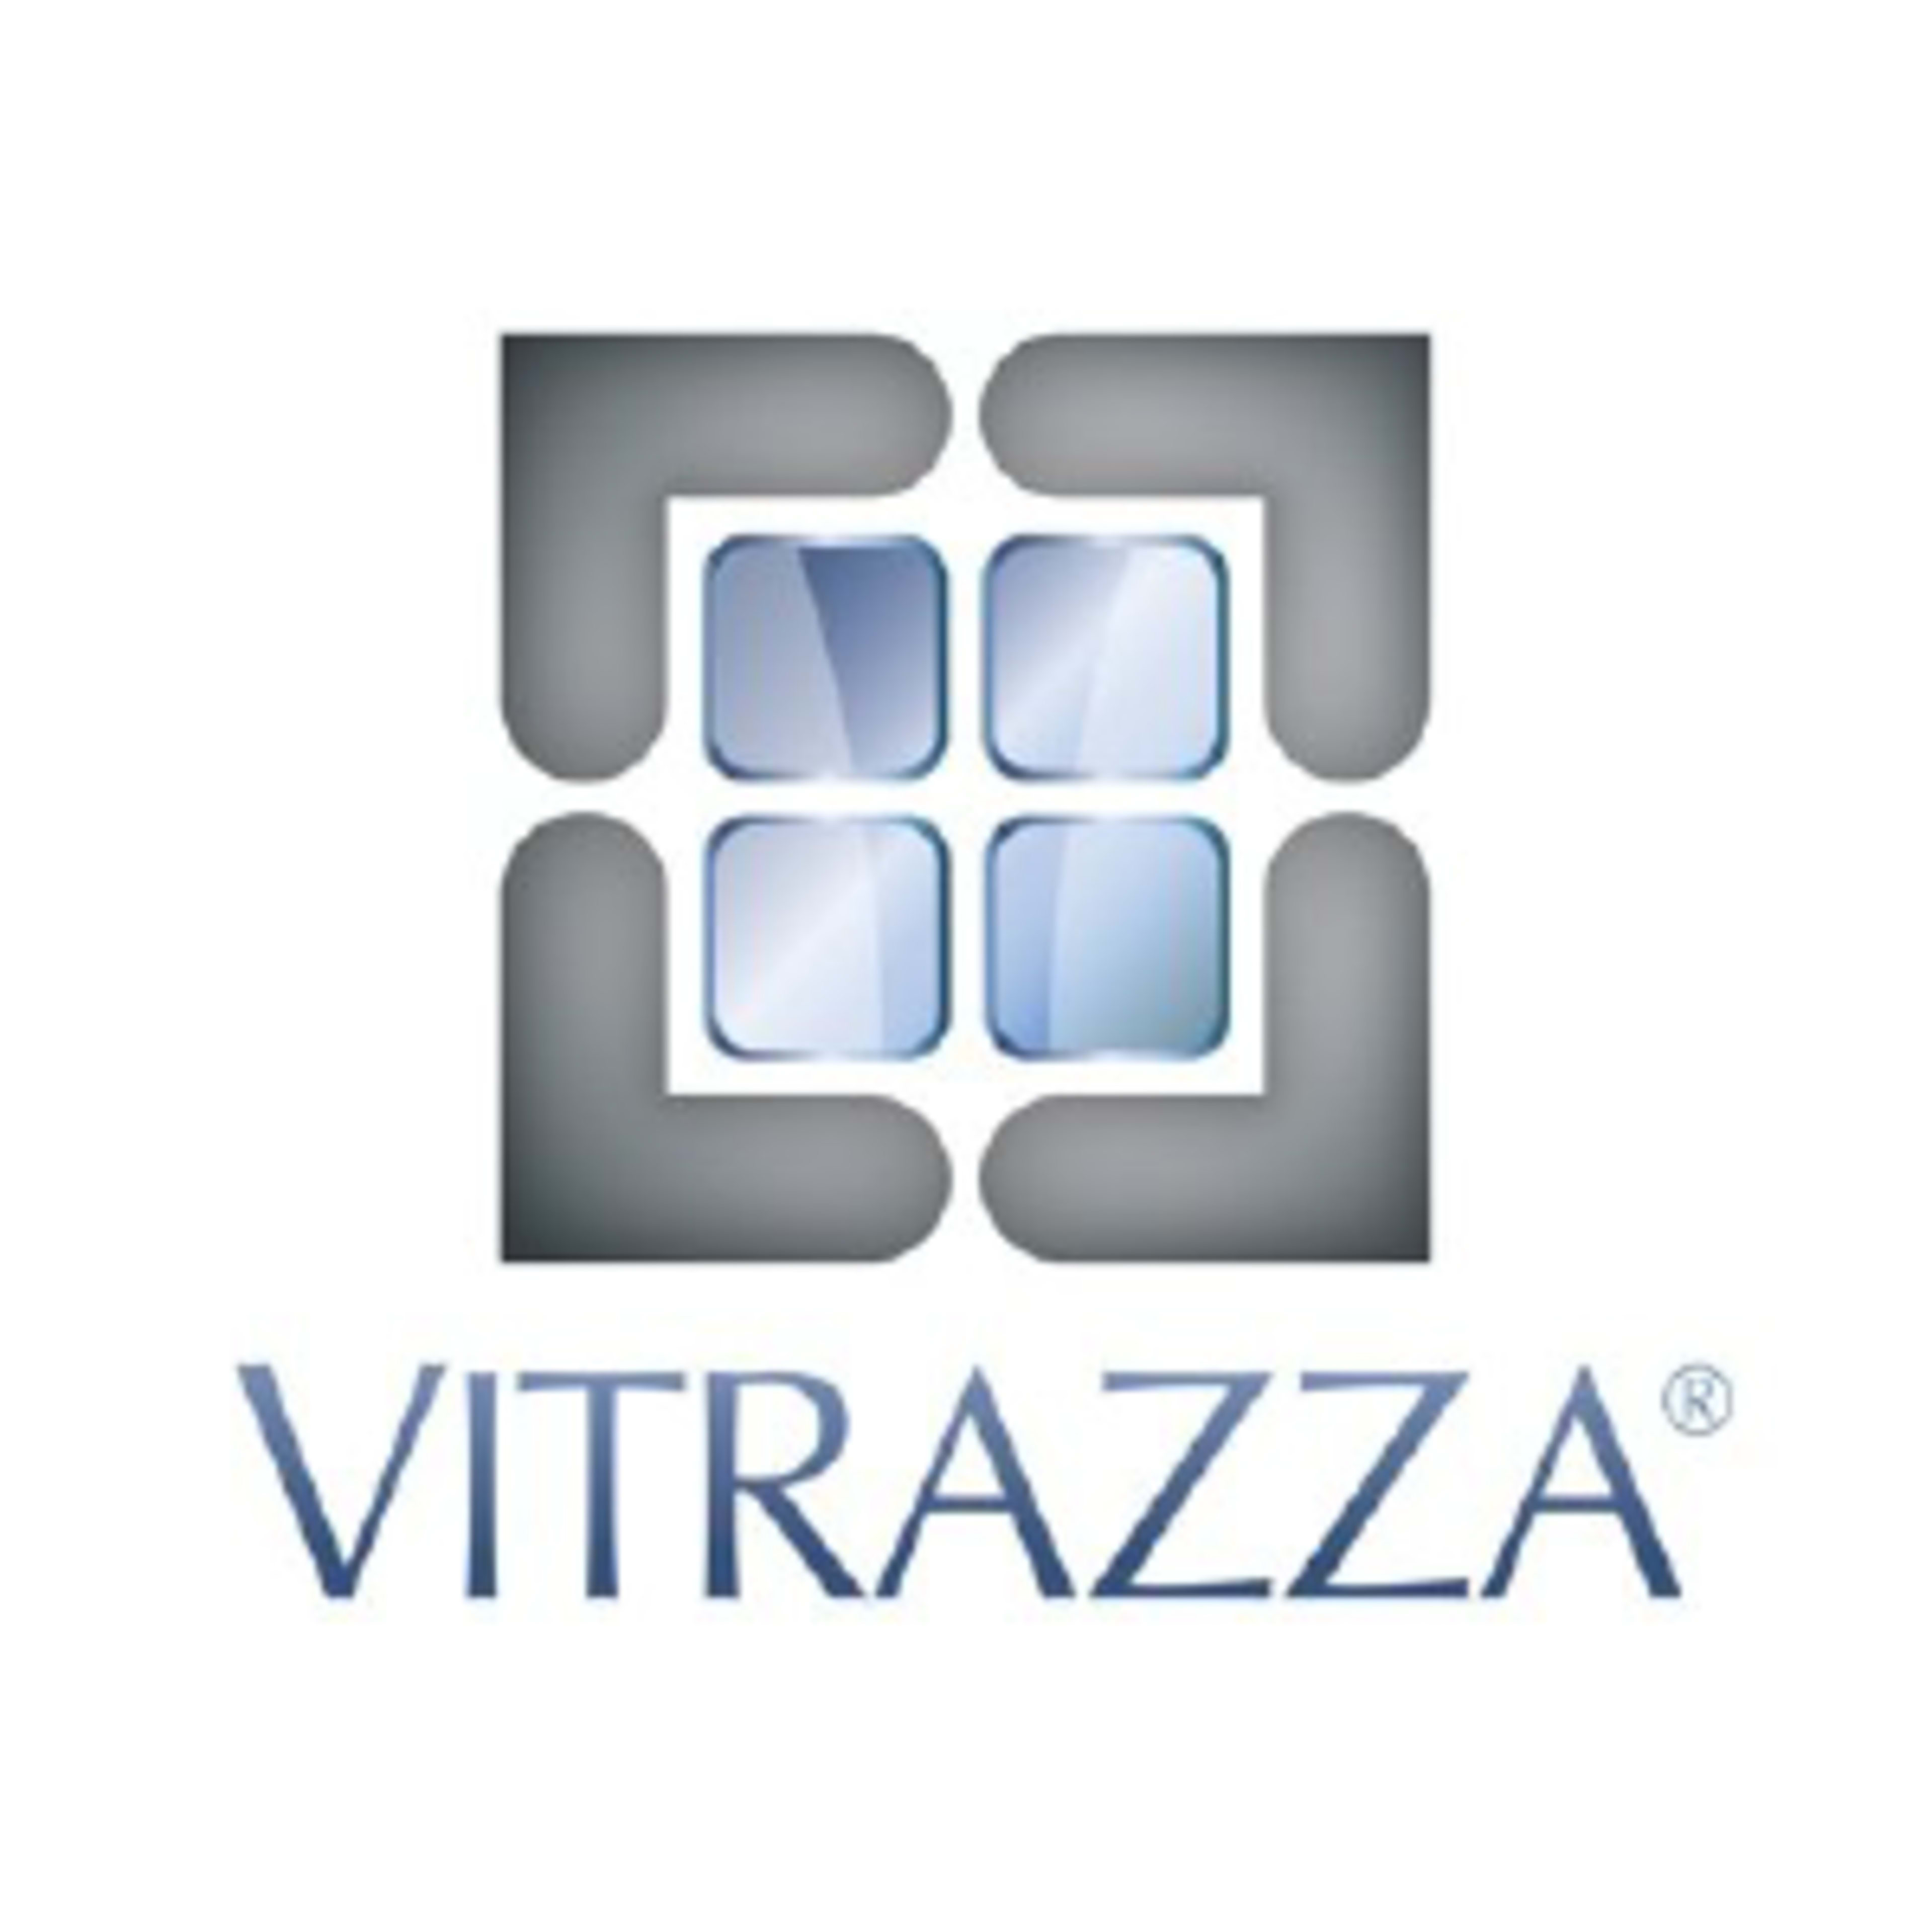 VitrazzaCode